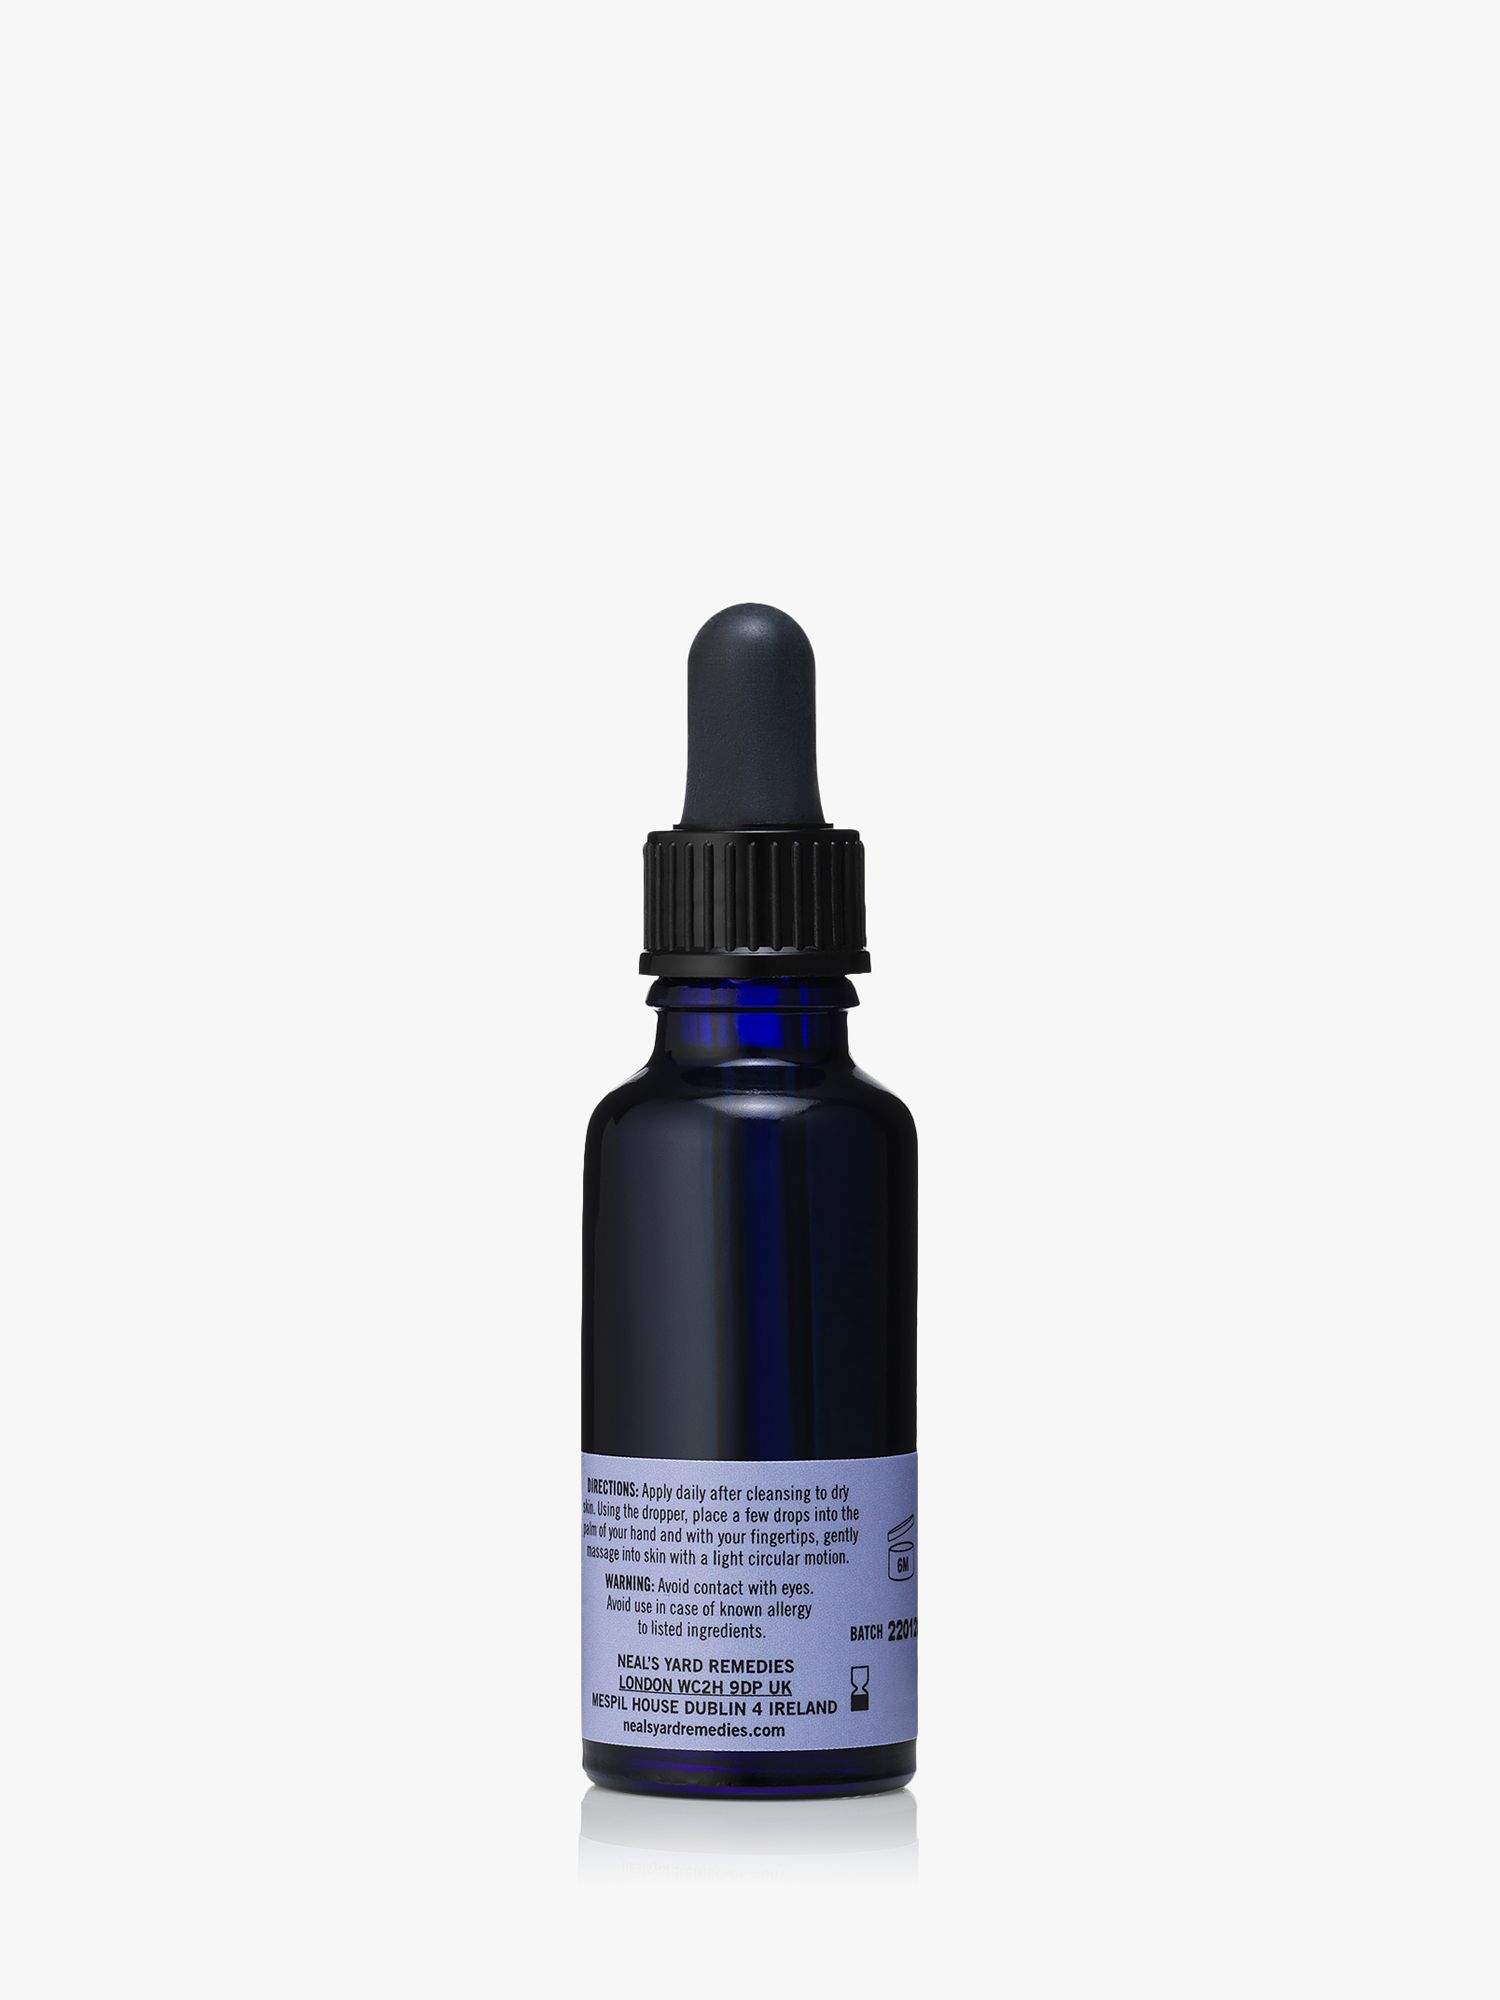 Neal's Yard Remedies Frankincense Facial Oil, 30ml 2